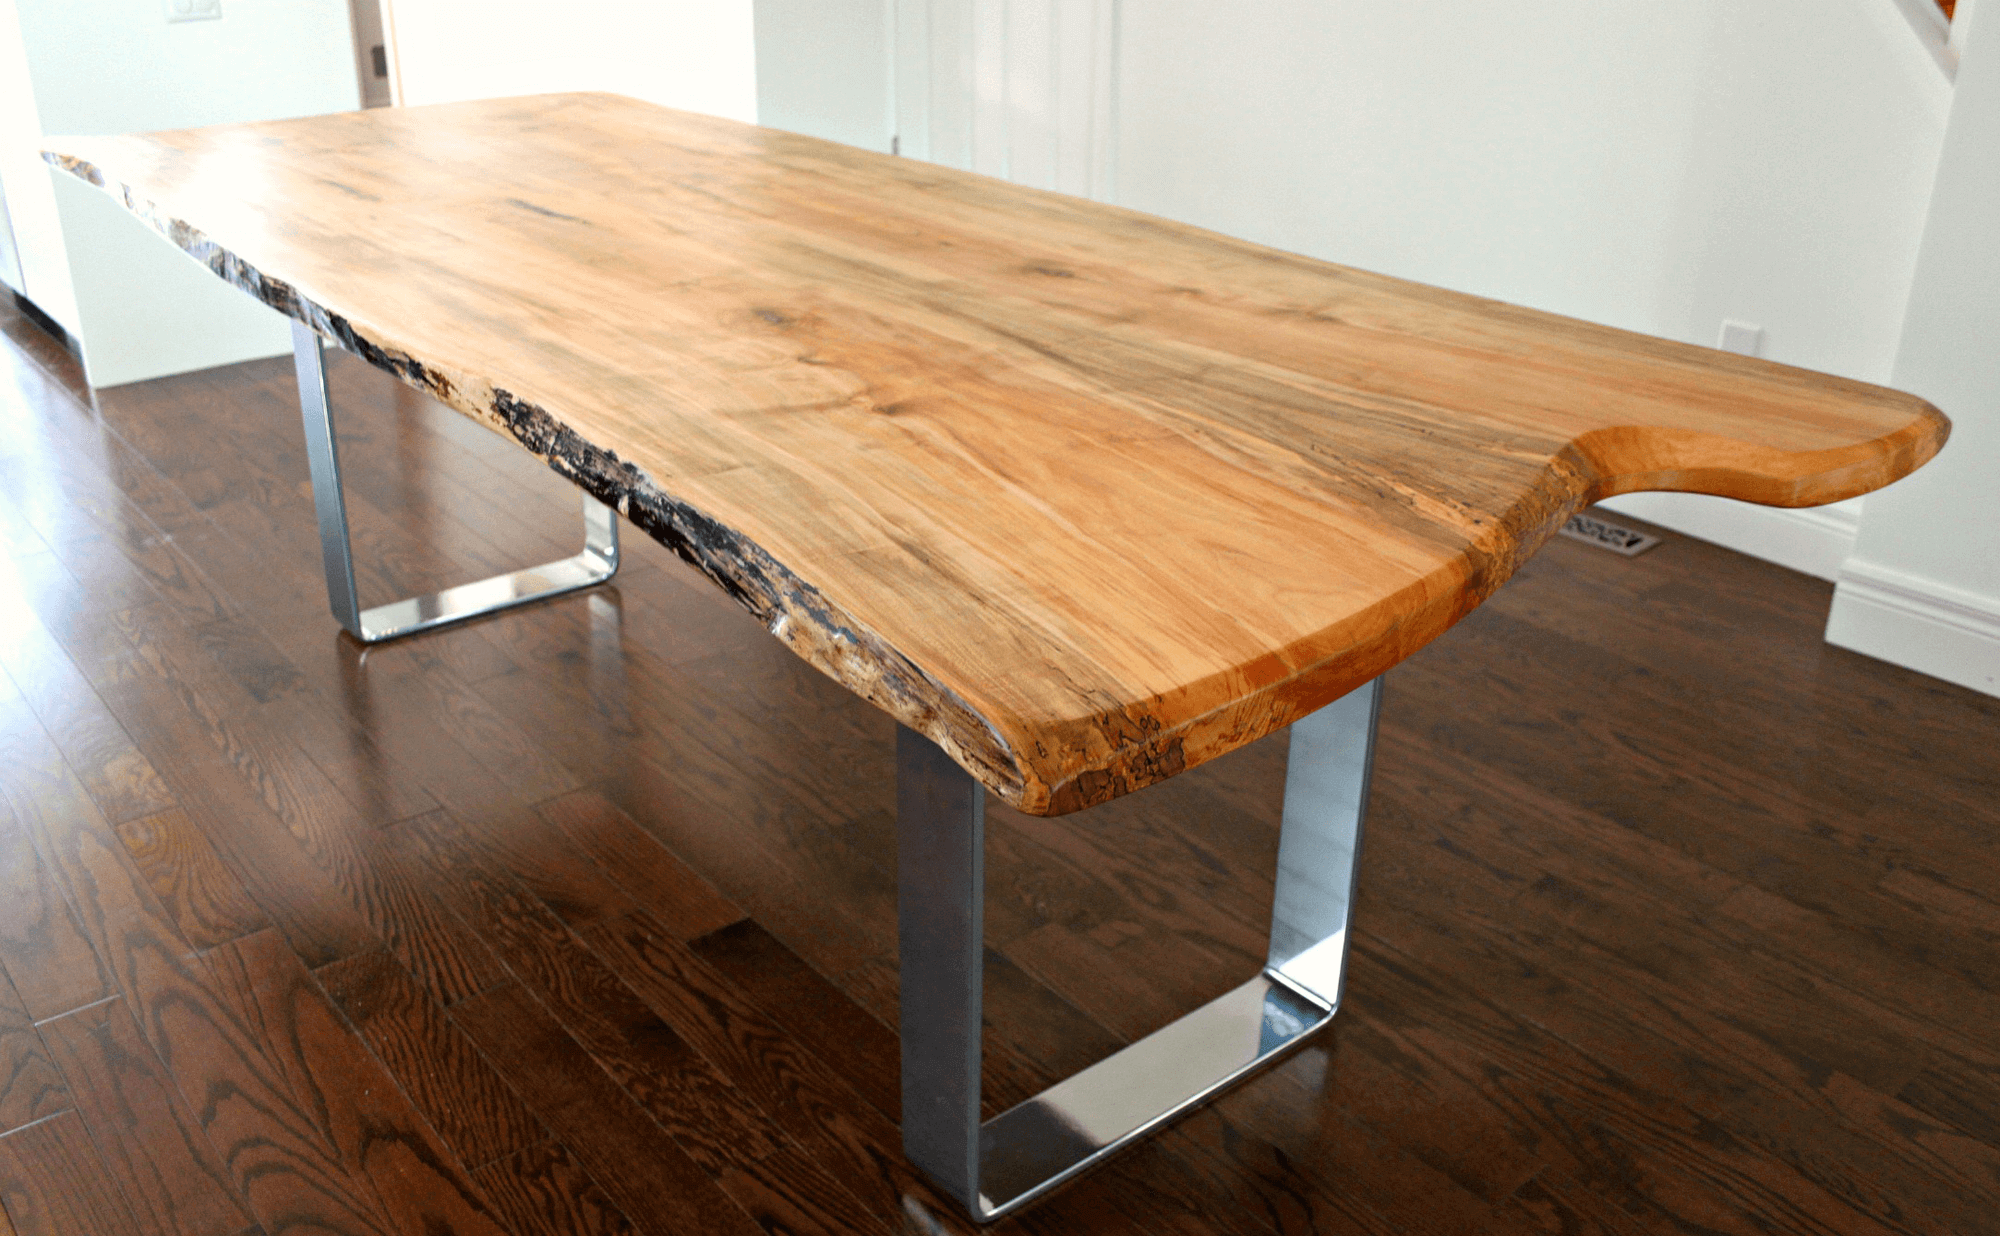 Live edge maple table with modern chrome base